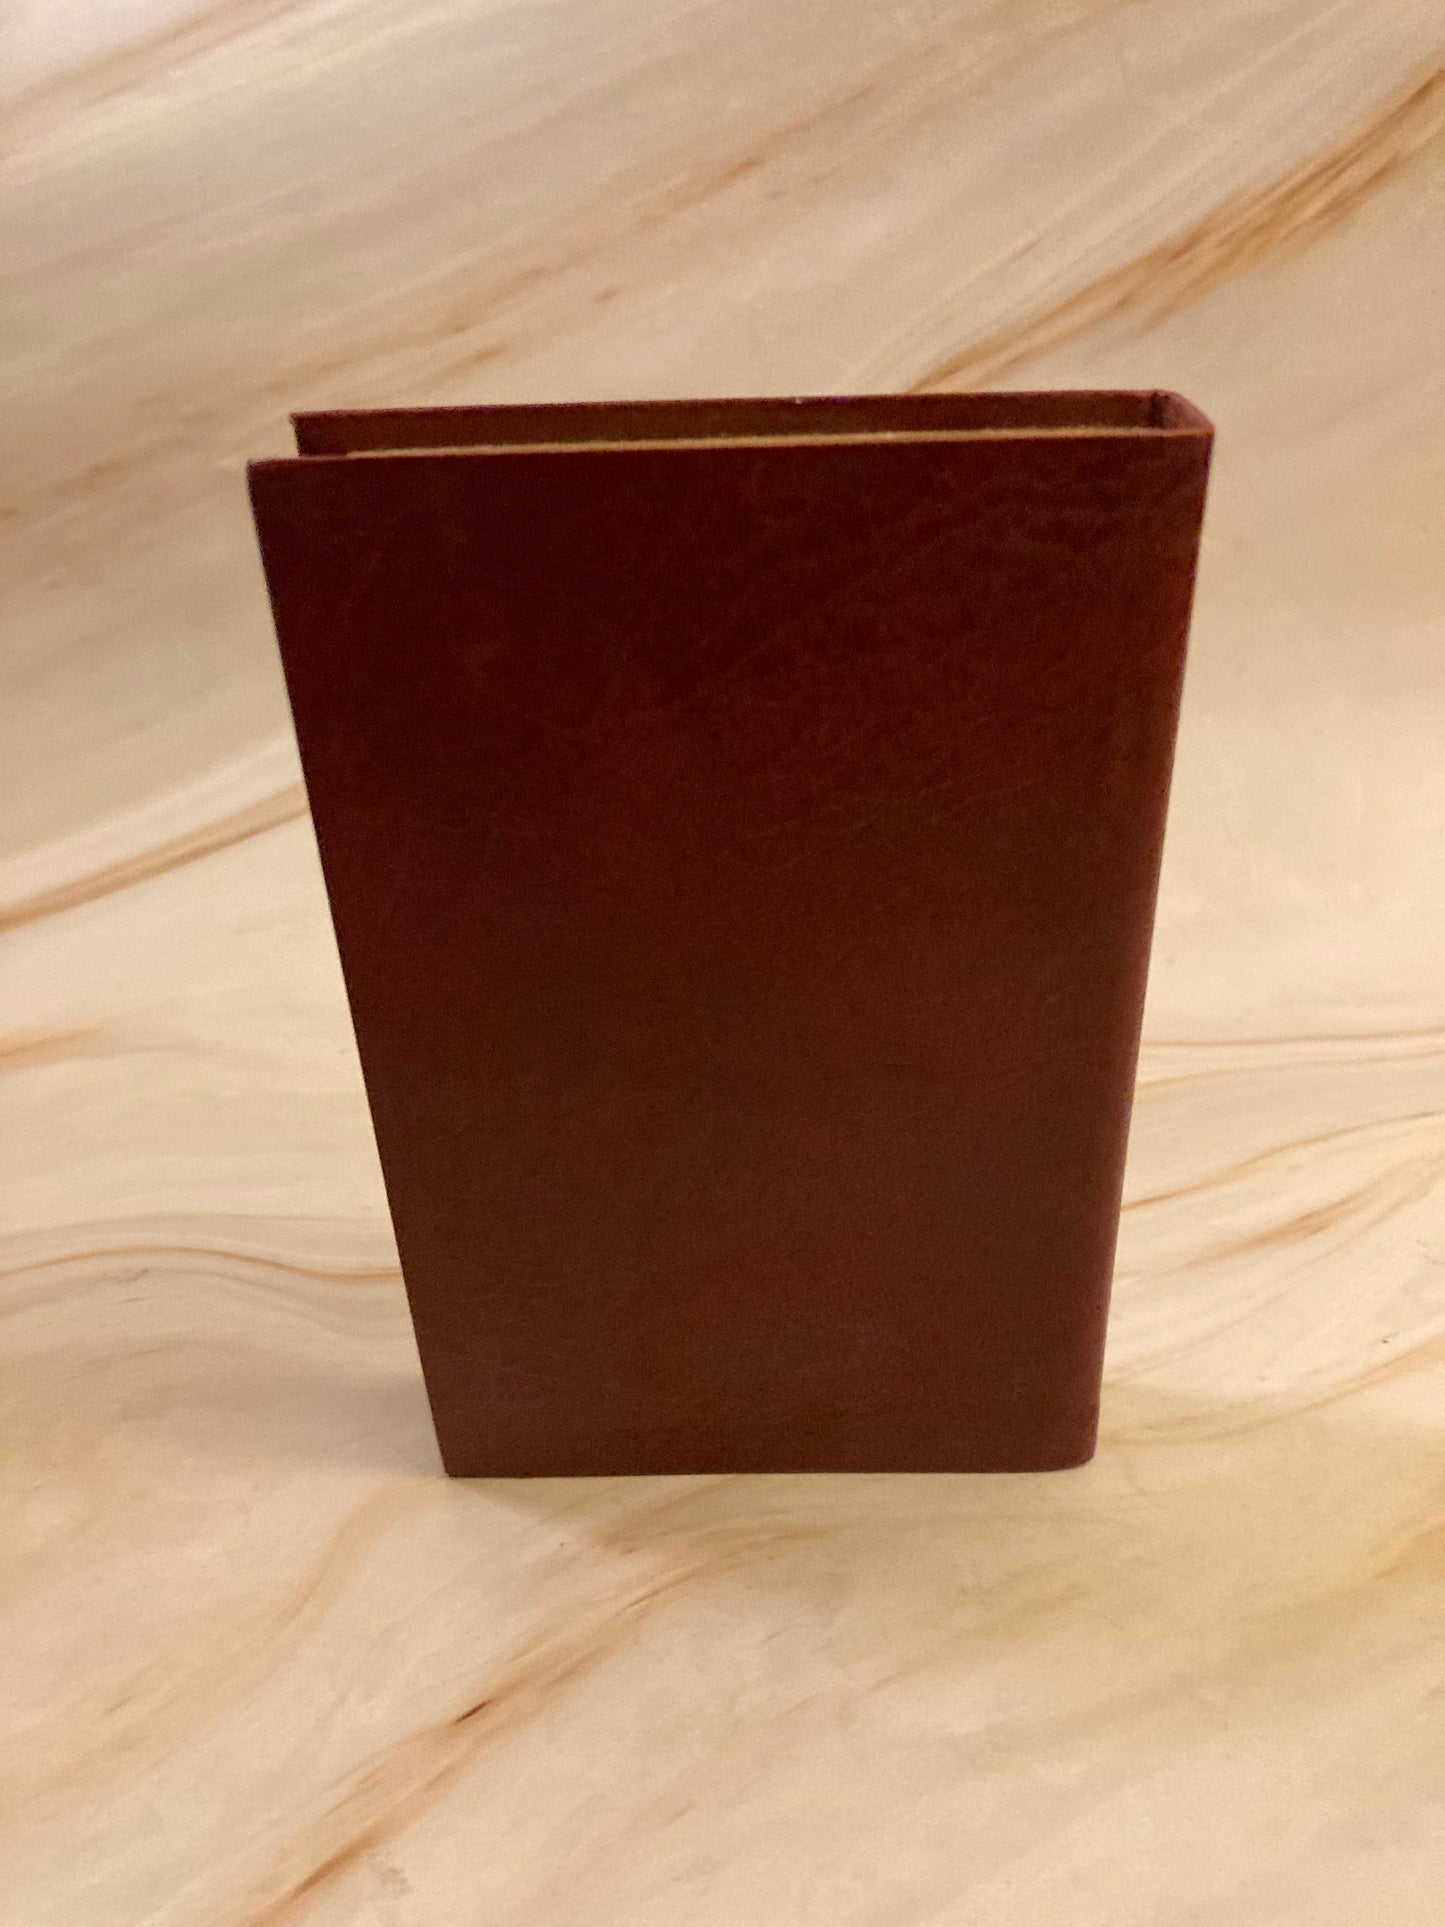 2015 Gideon Pocket Size Bible Burgundy Red Bible - (Ref x217)